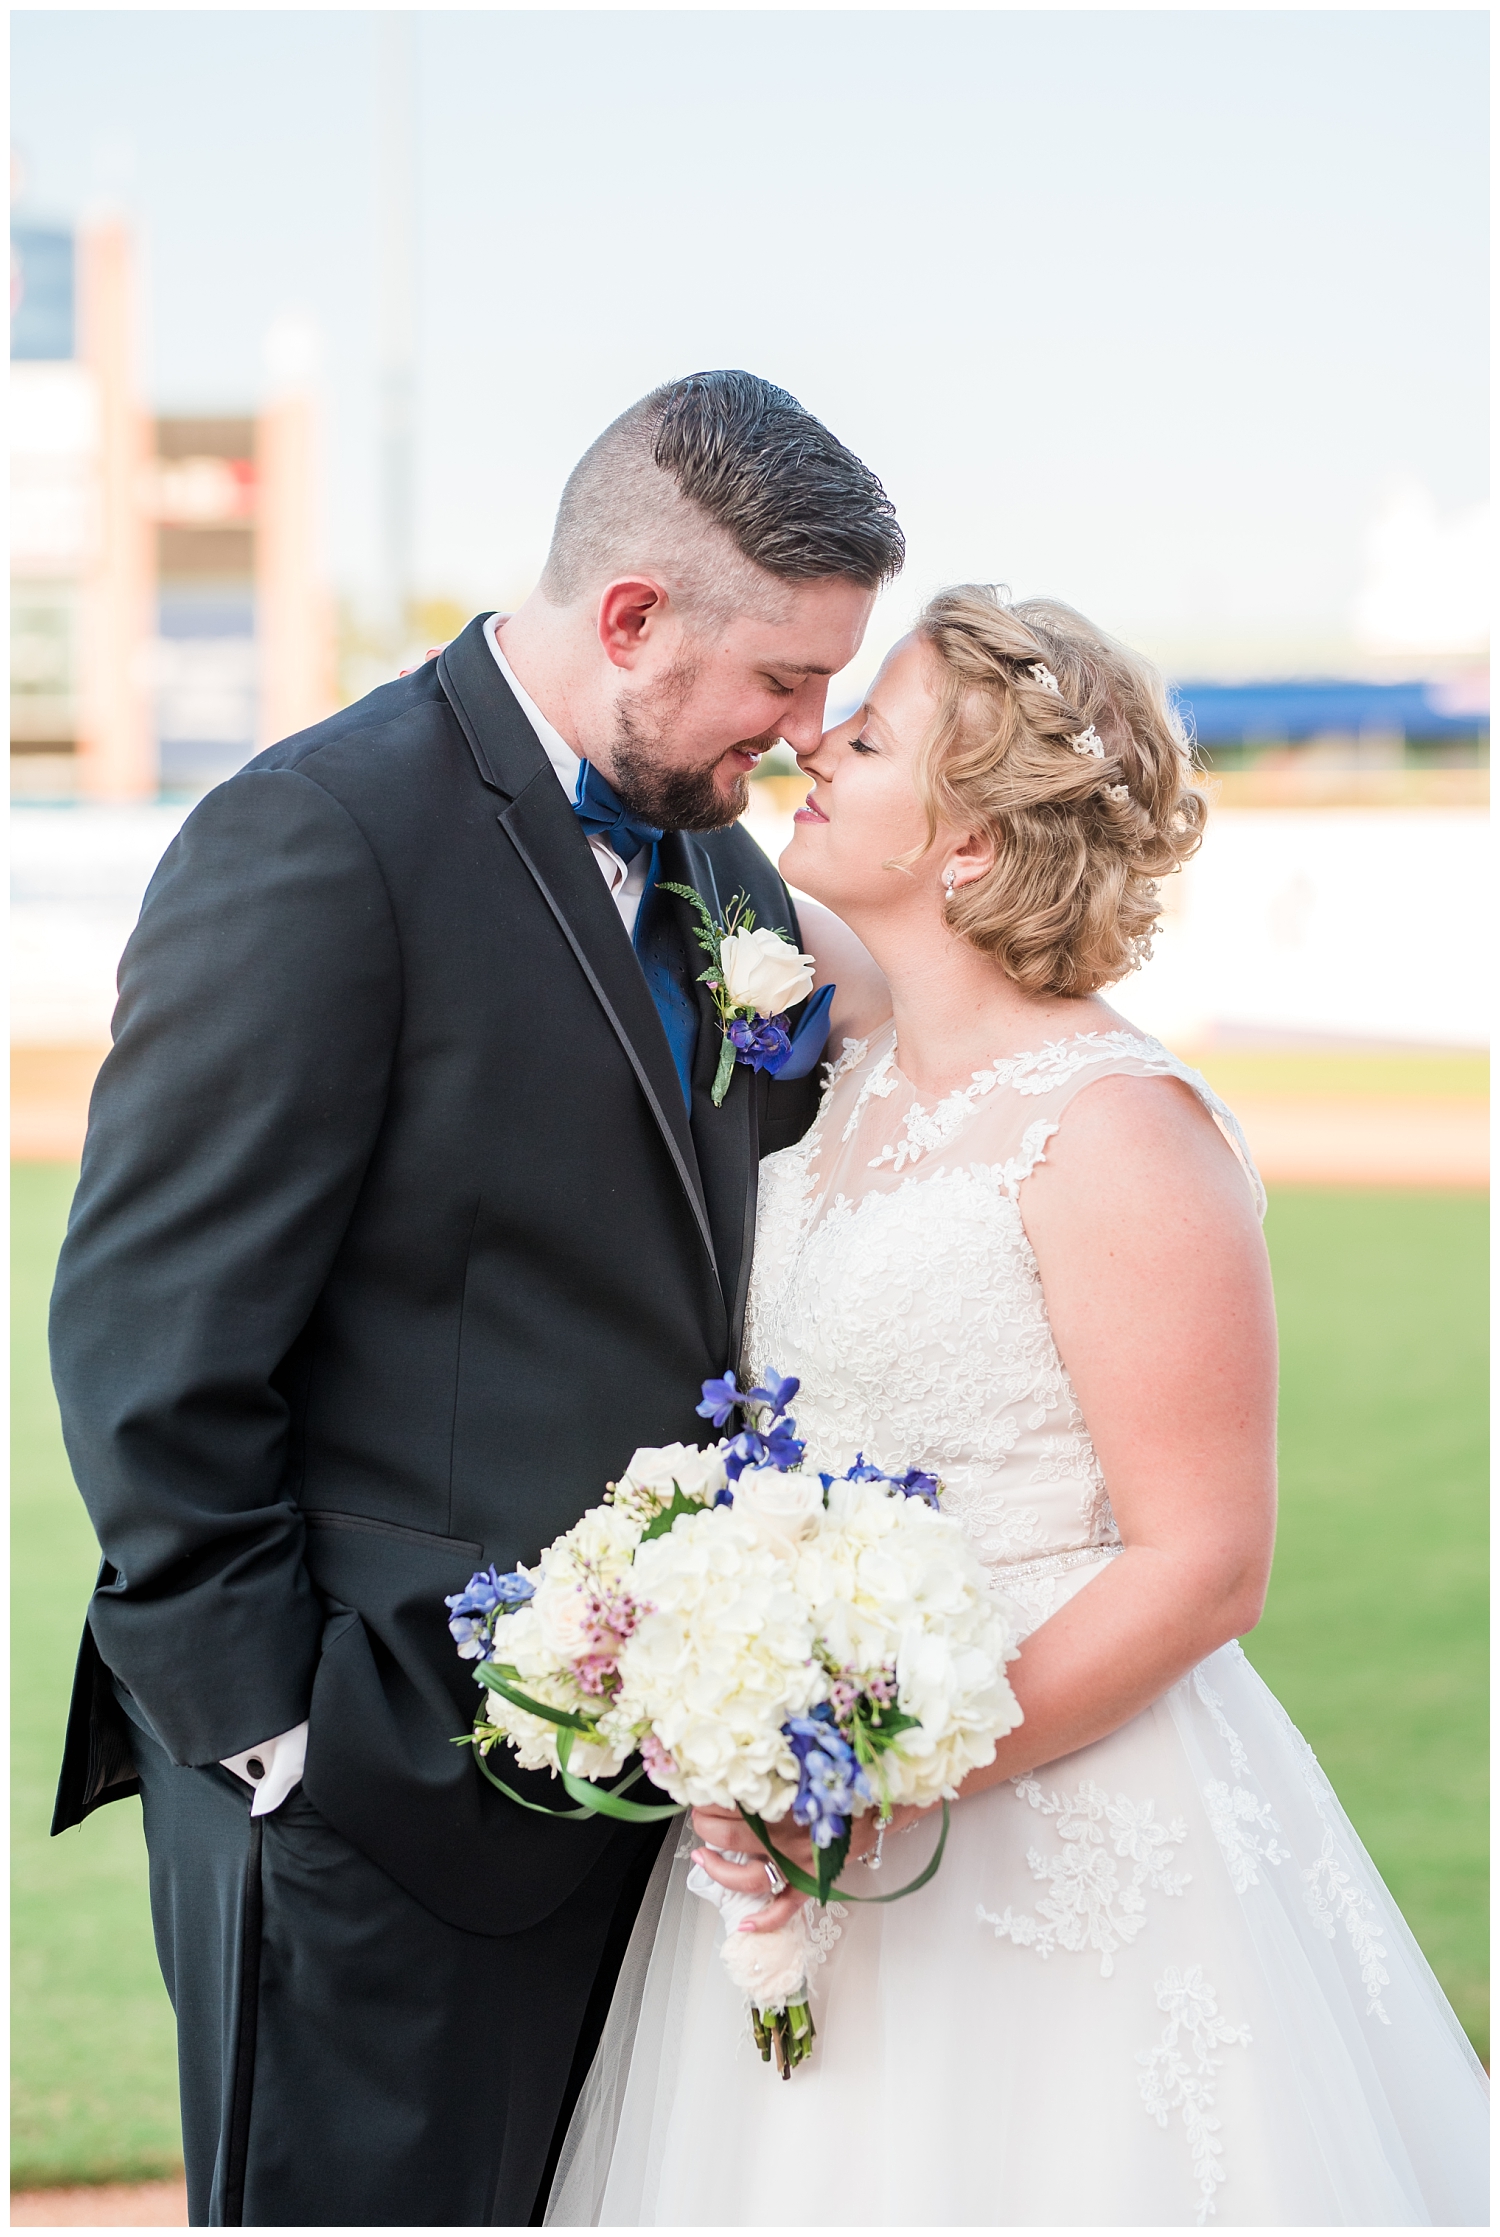 Sarah and David's Baseball Field Wedding in Lexington, Kentucky